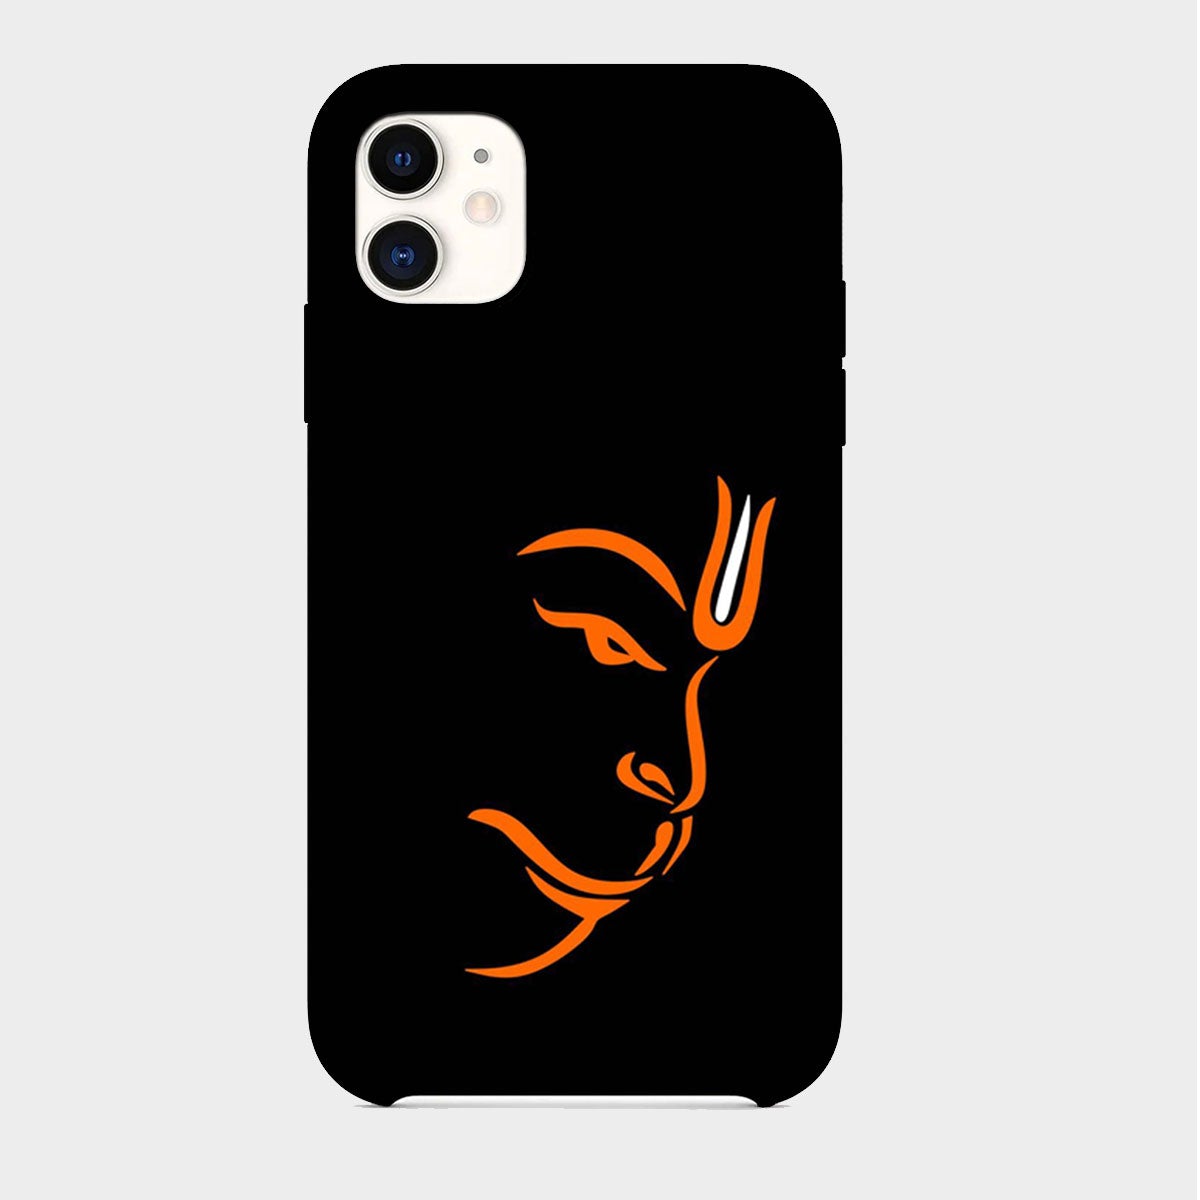 Hanuman - Mobile Phone Cover - Hard Case